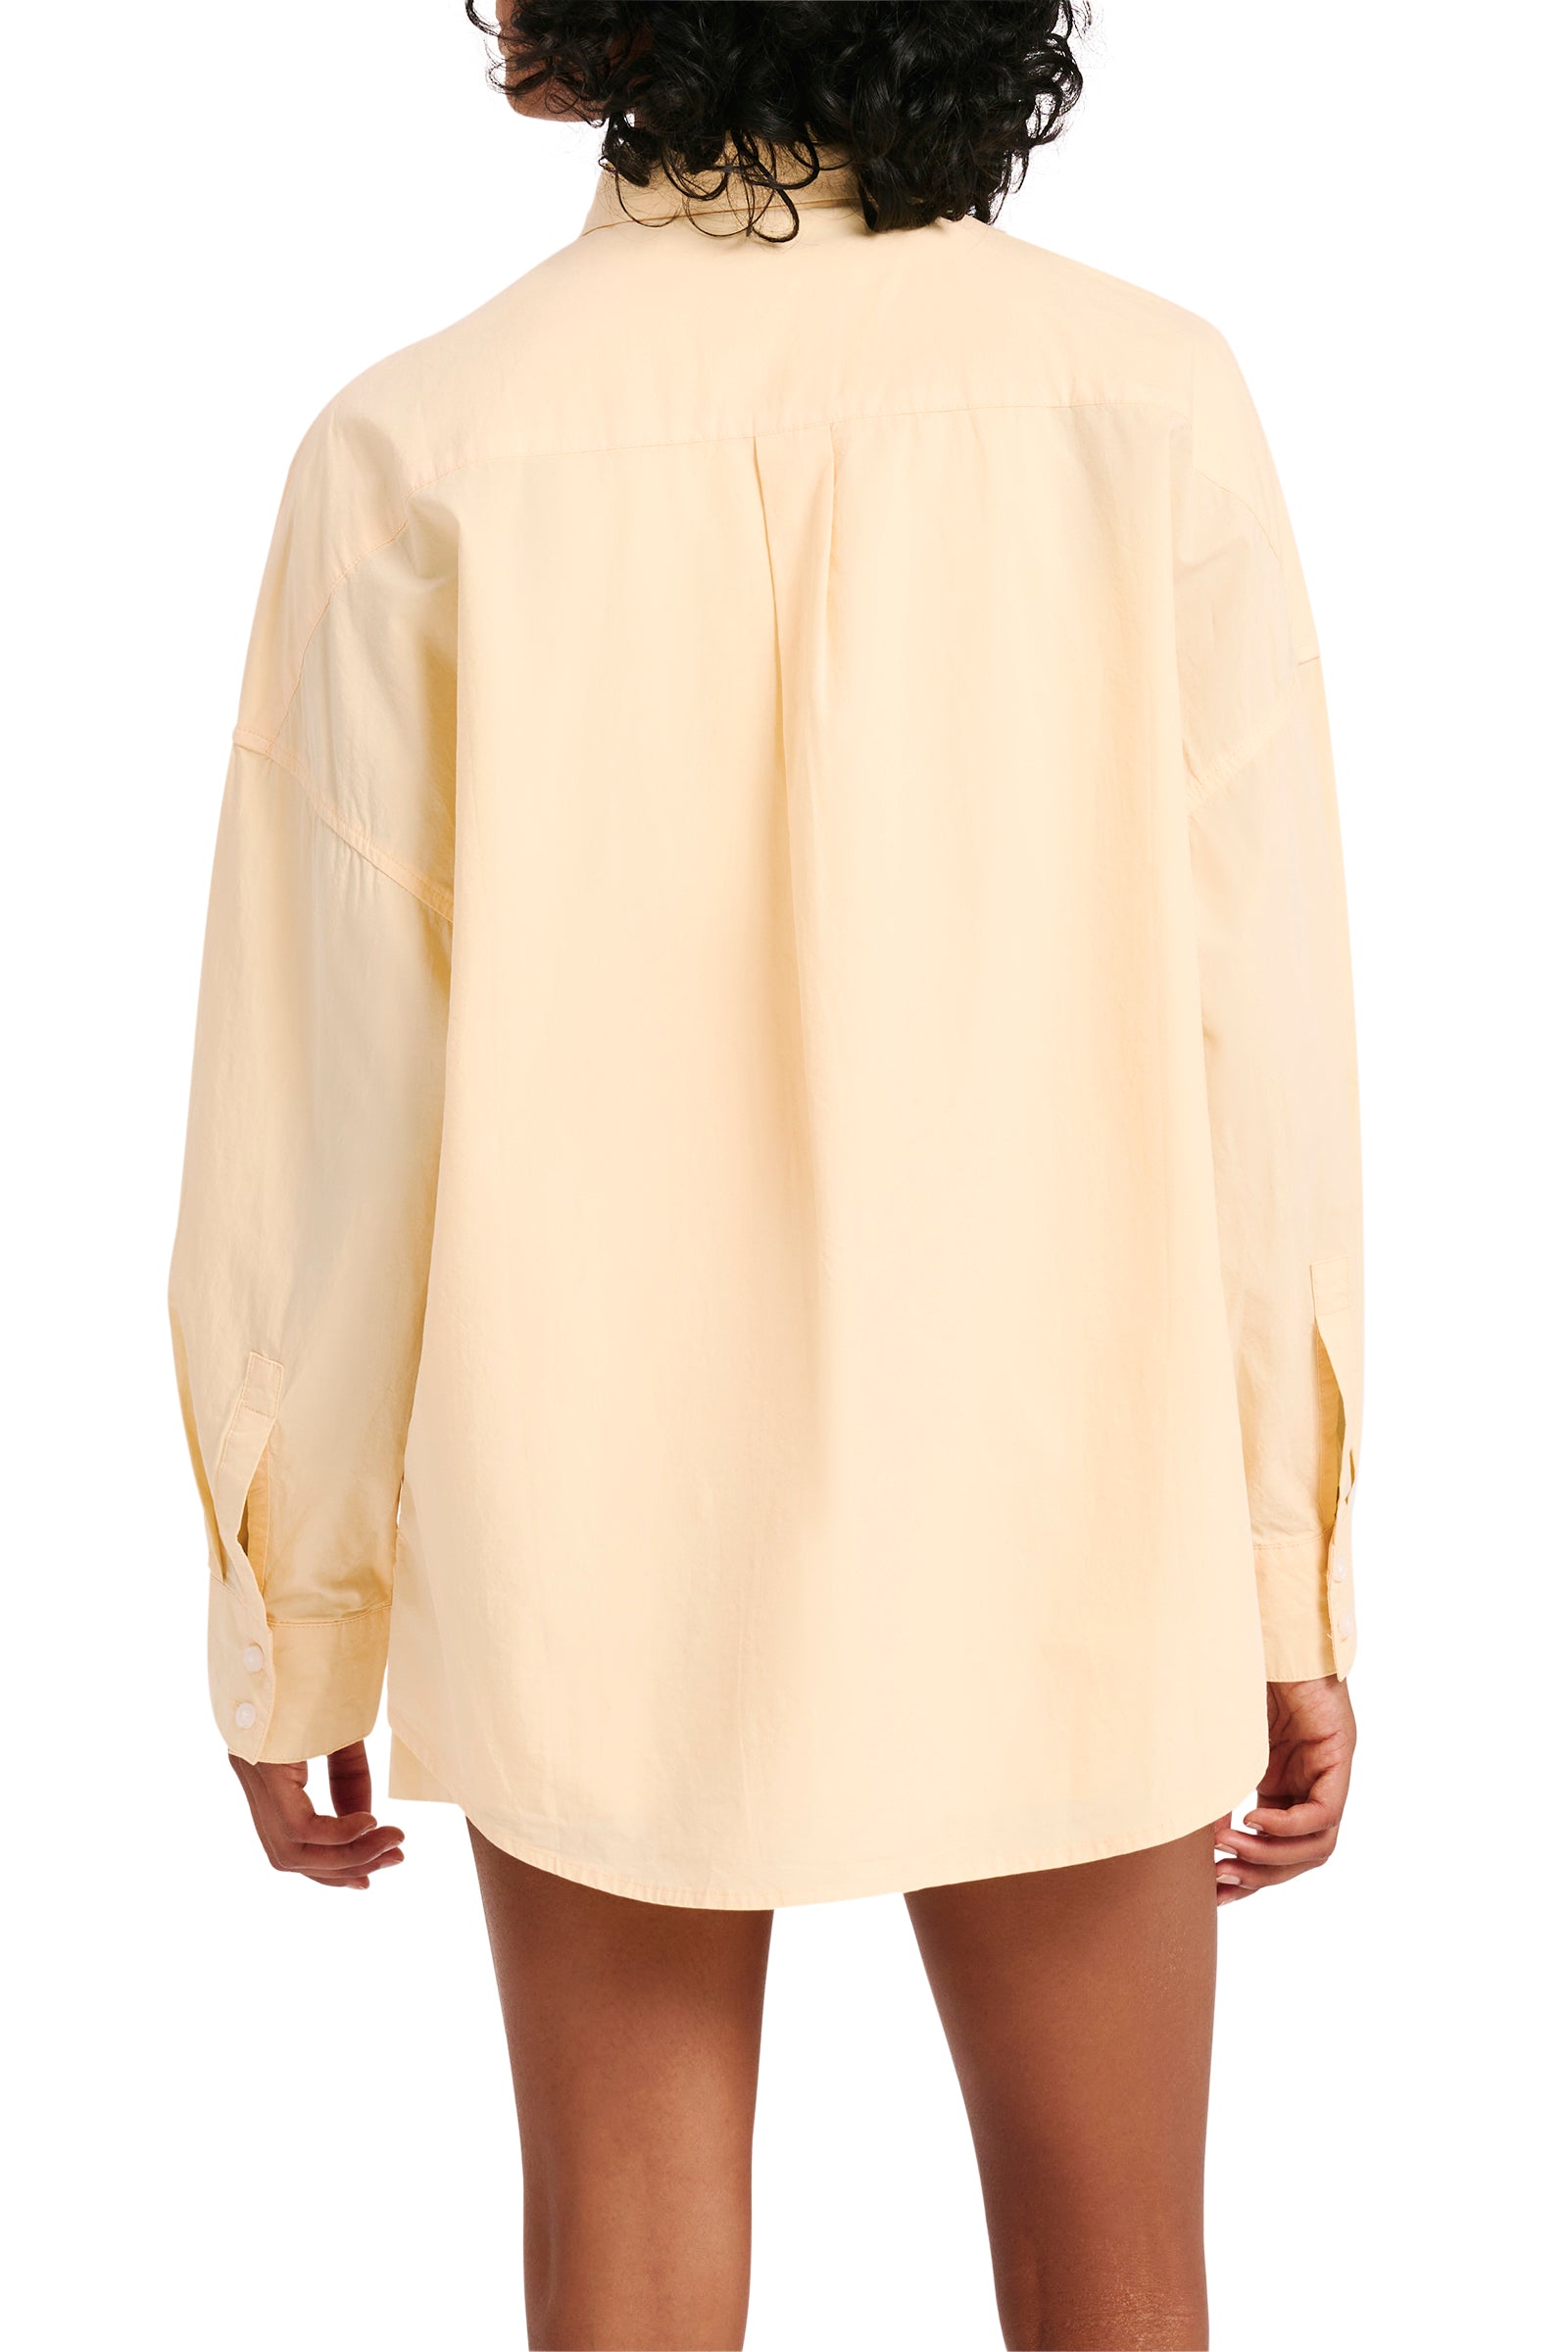 Nude Lucy Cruz Poplin Shirt in a Yellow Straw Colour